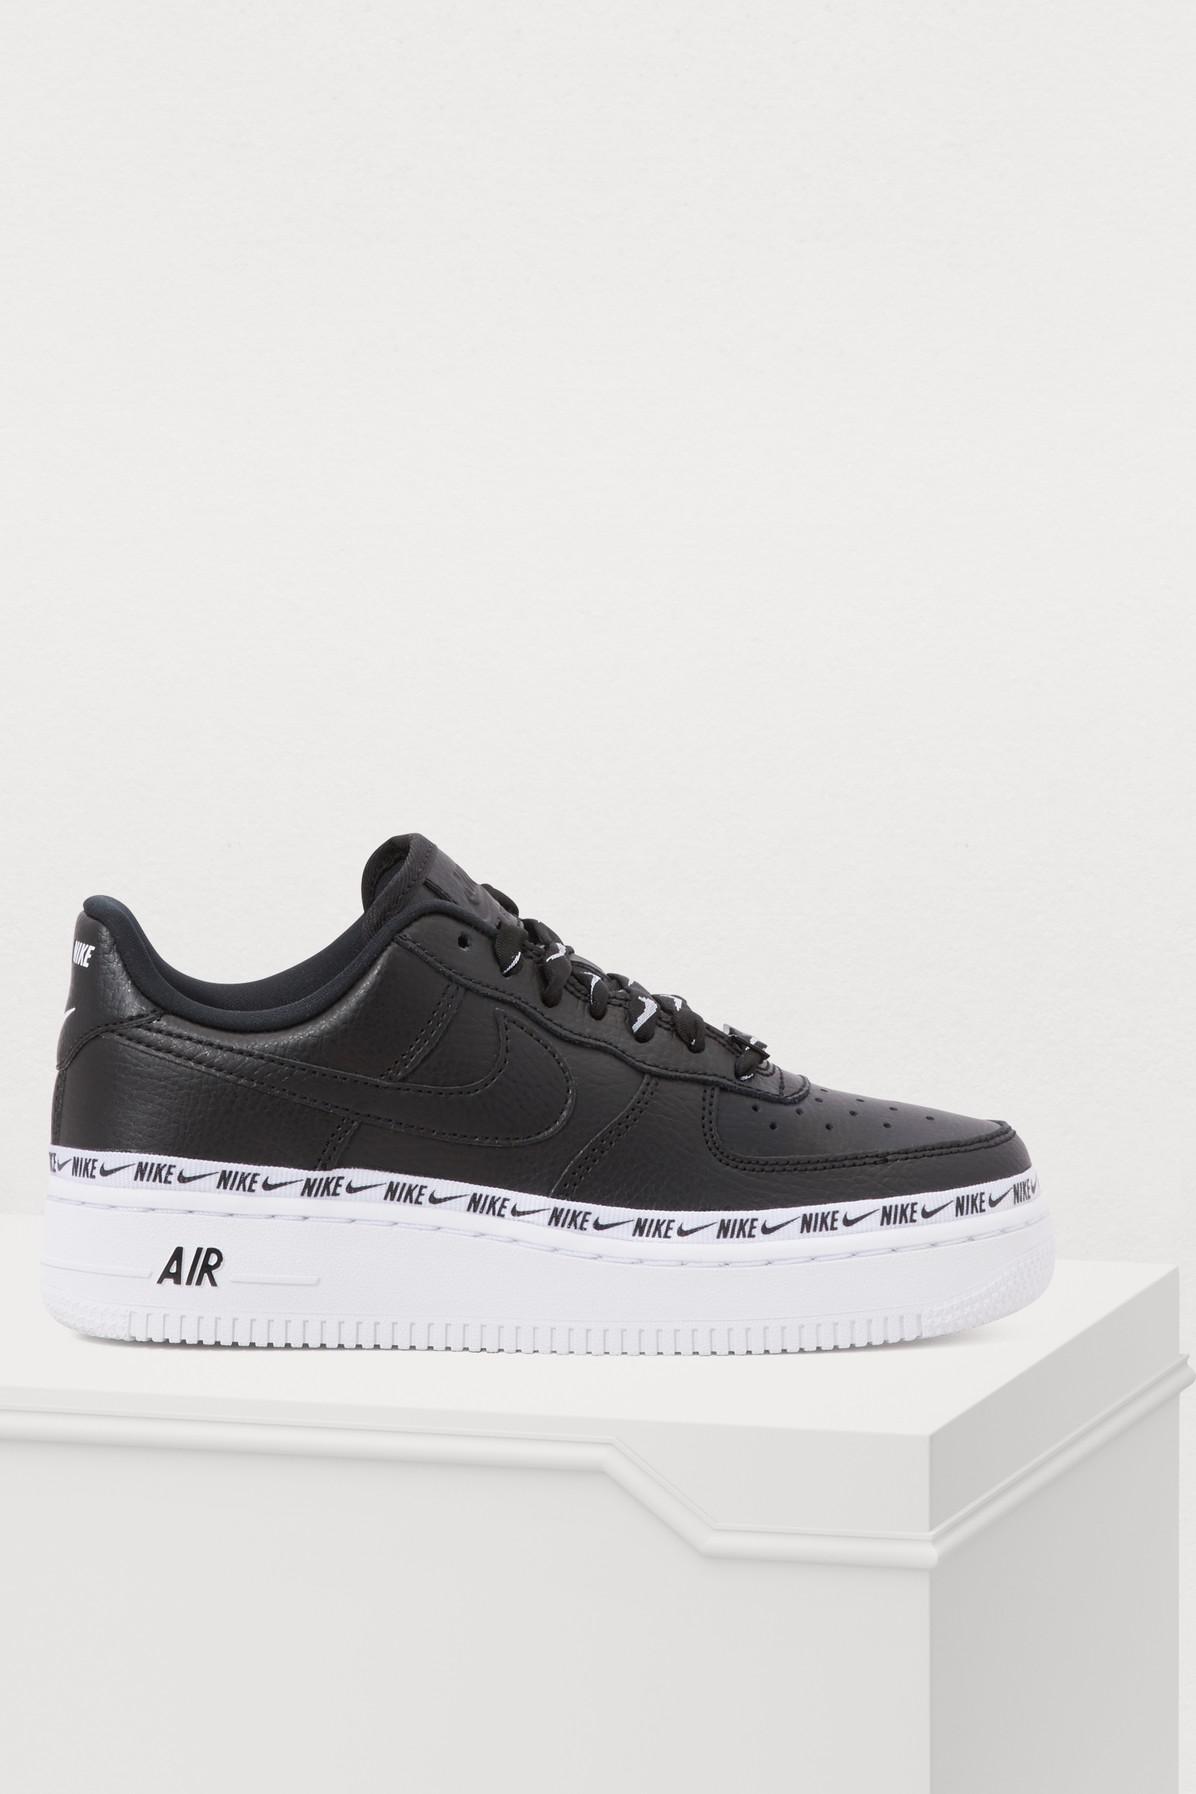 Nike Air Force 1 07 Se Prm Sneakers in Black/Black-White (Black) | Lyst